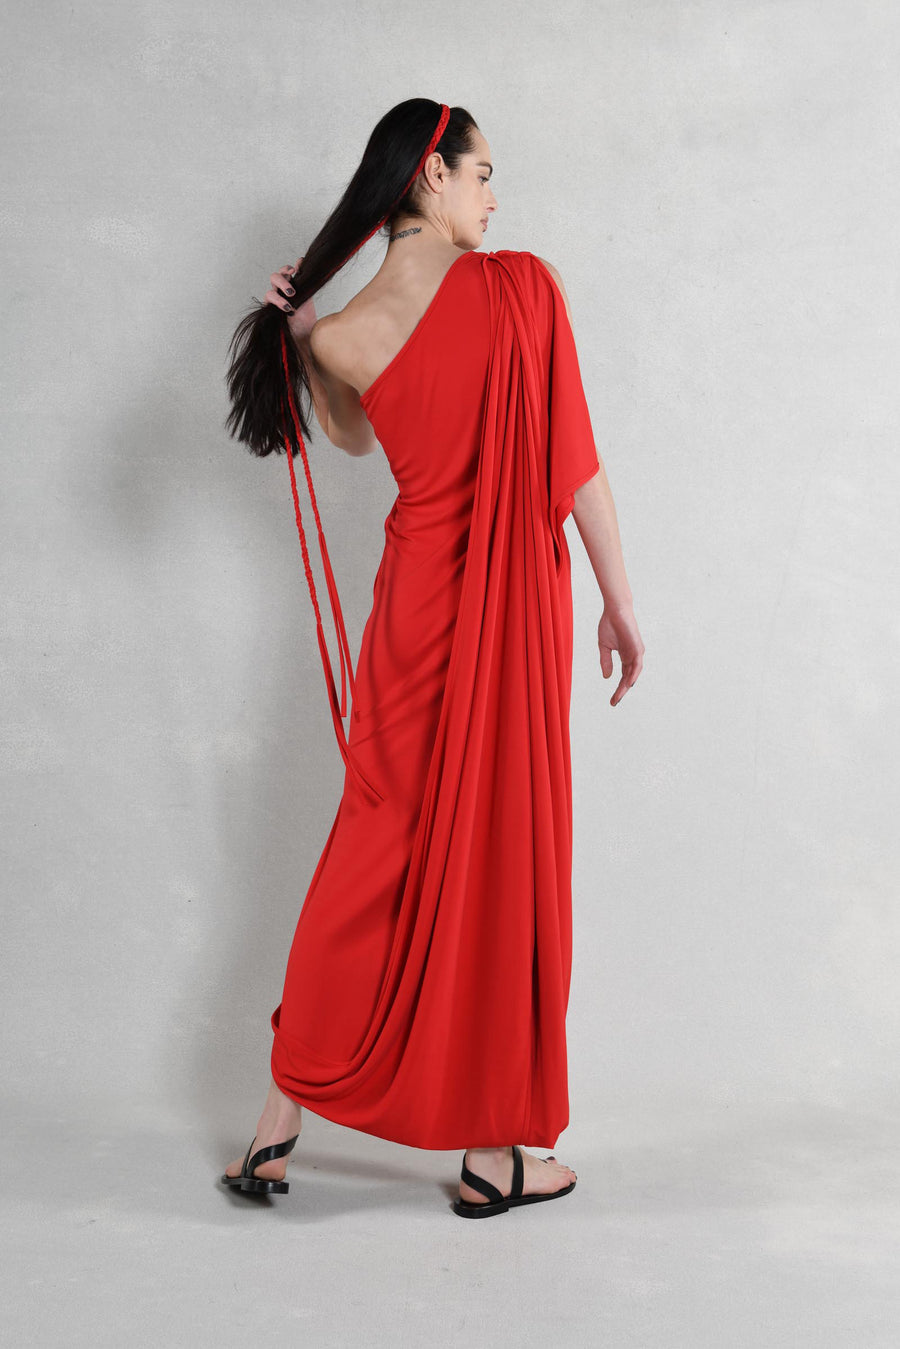 Everyway Dress : Red Matte Jersey